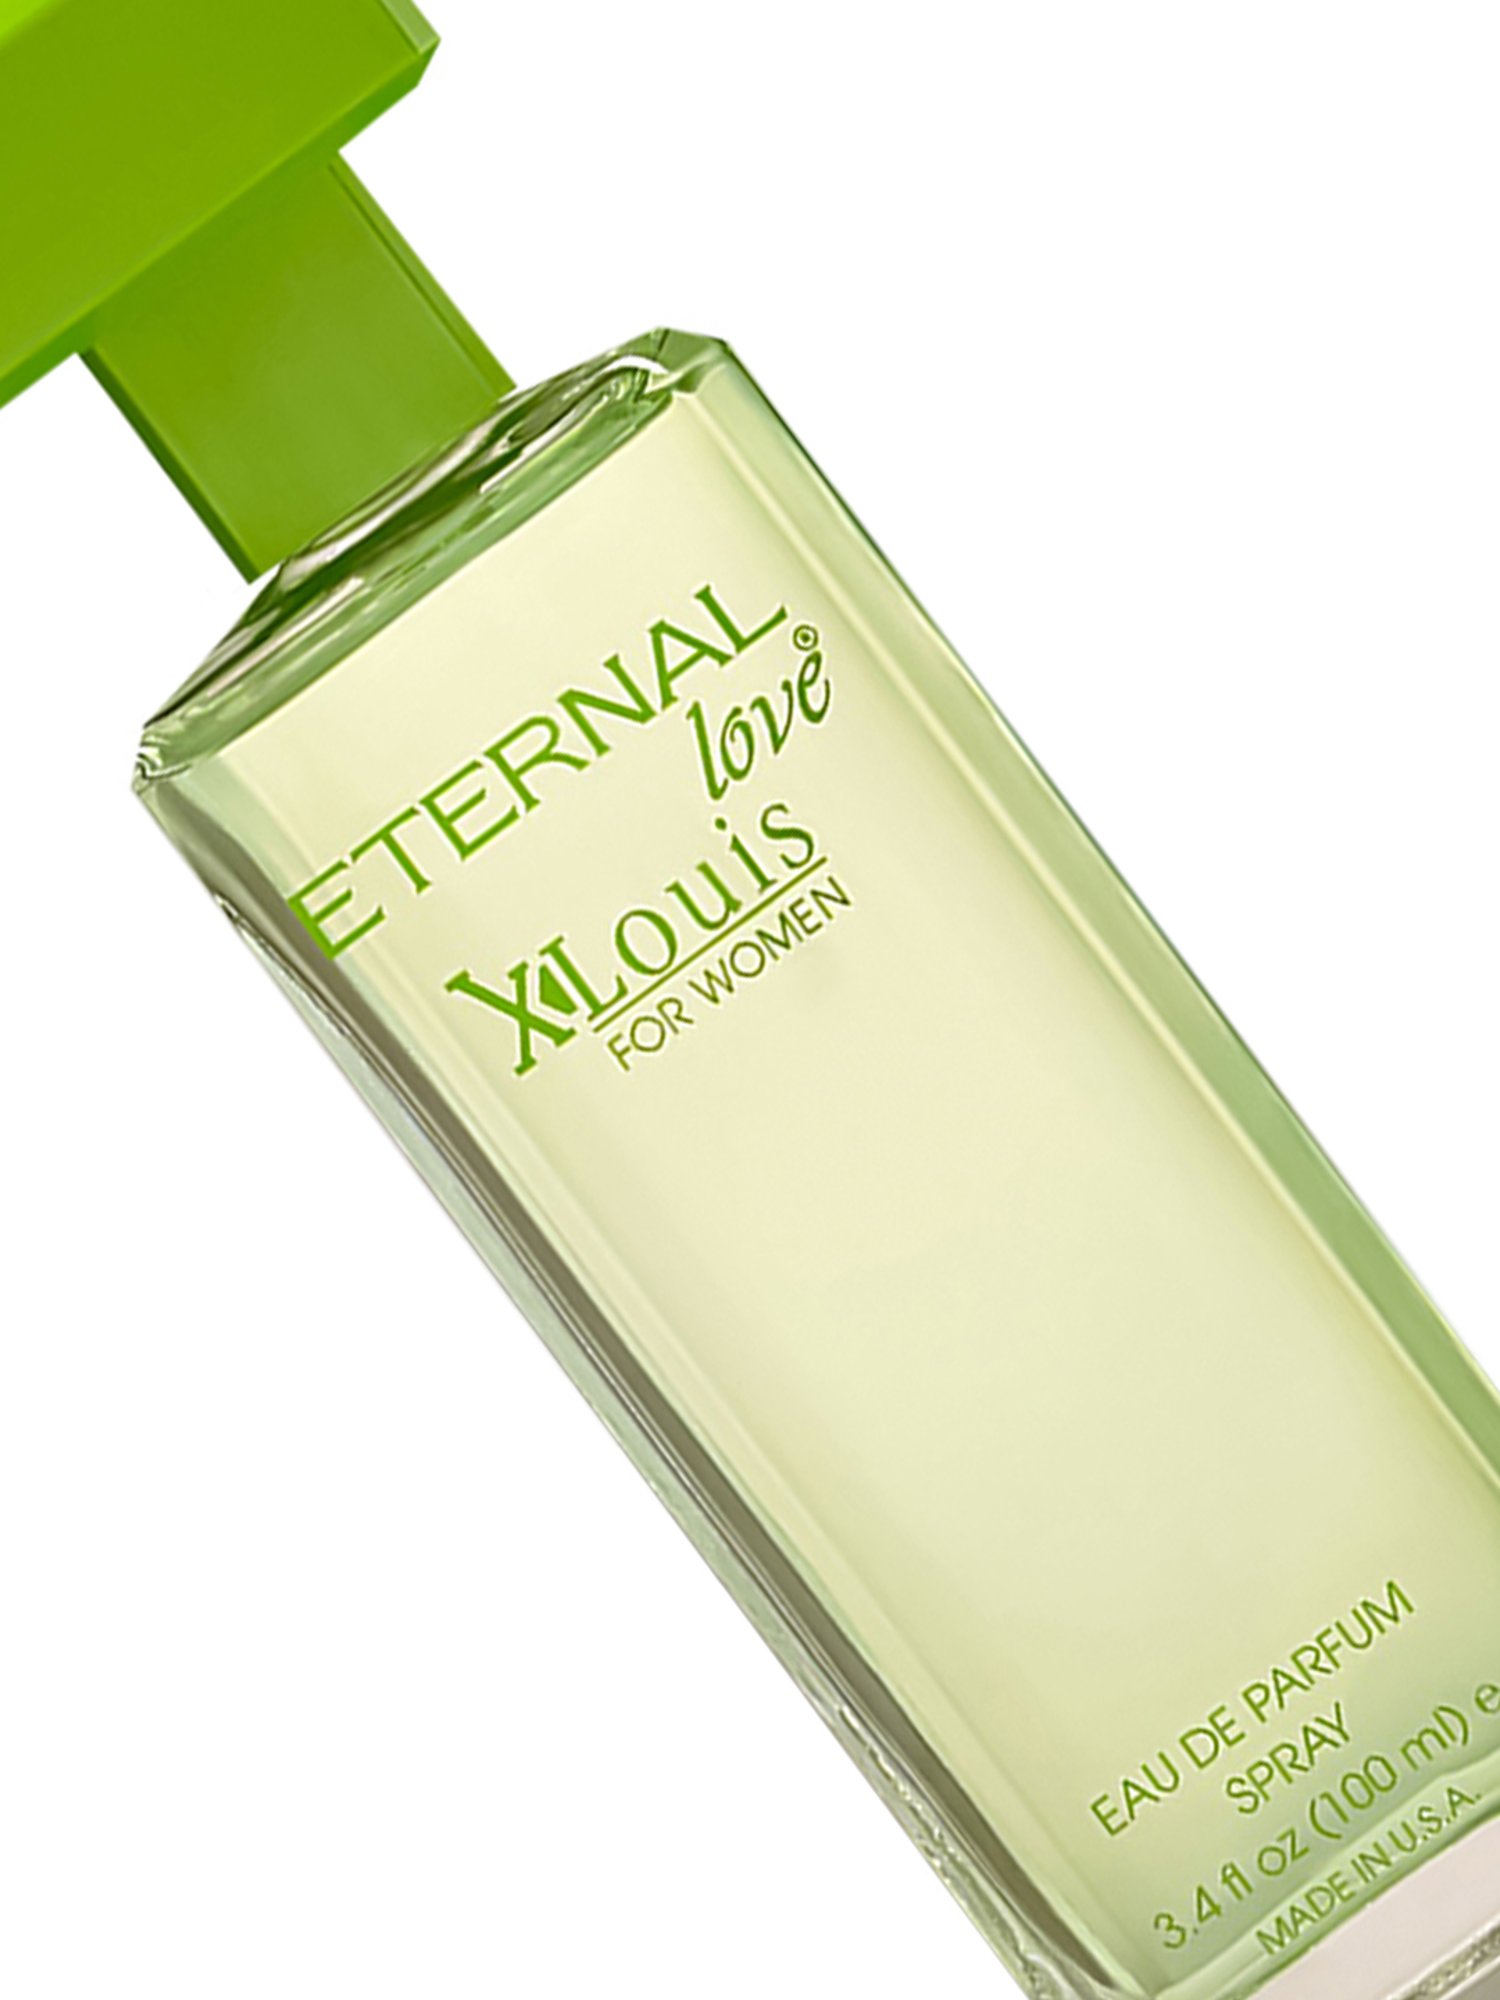 Buy ETERNAL Love X-Louis for Women Eau De Parfum, 50ml Online at Best  Prices in India - JioMart.